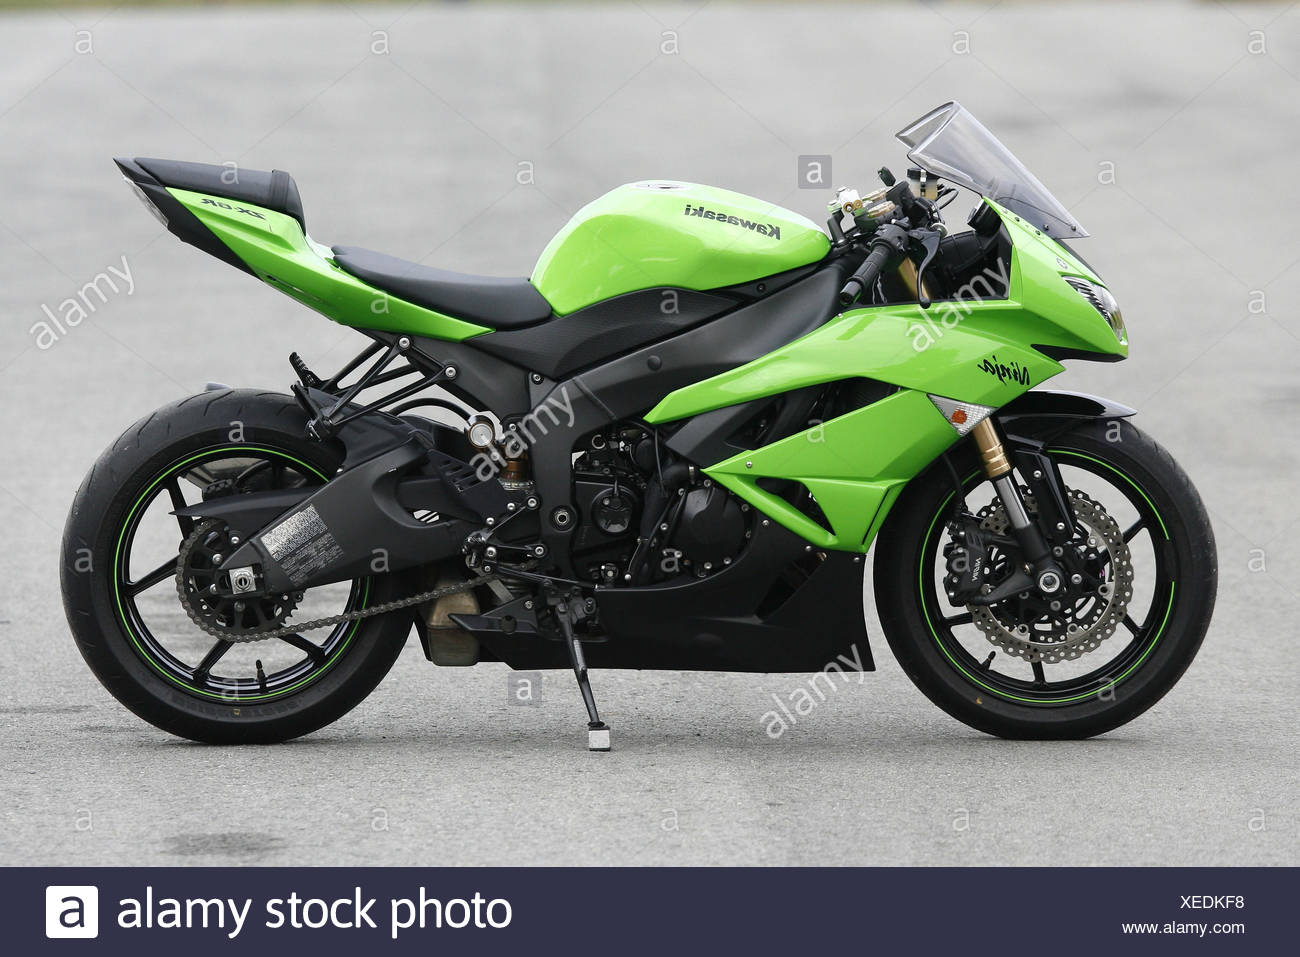 Motorcycle, Kawasaki Ninja, supersportsman, standard, side view Stock Photo  - Alamy